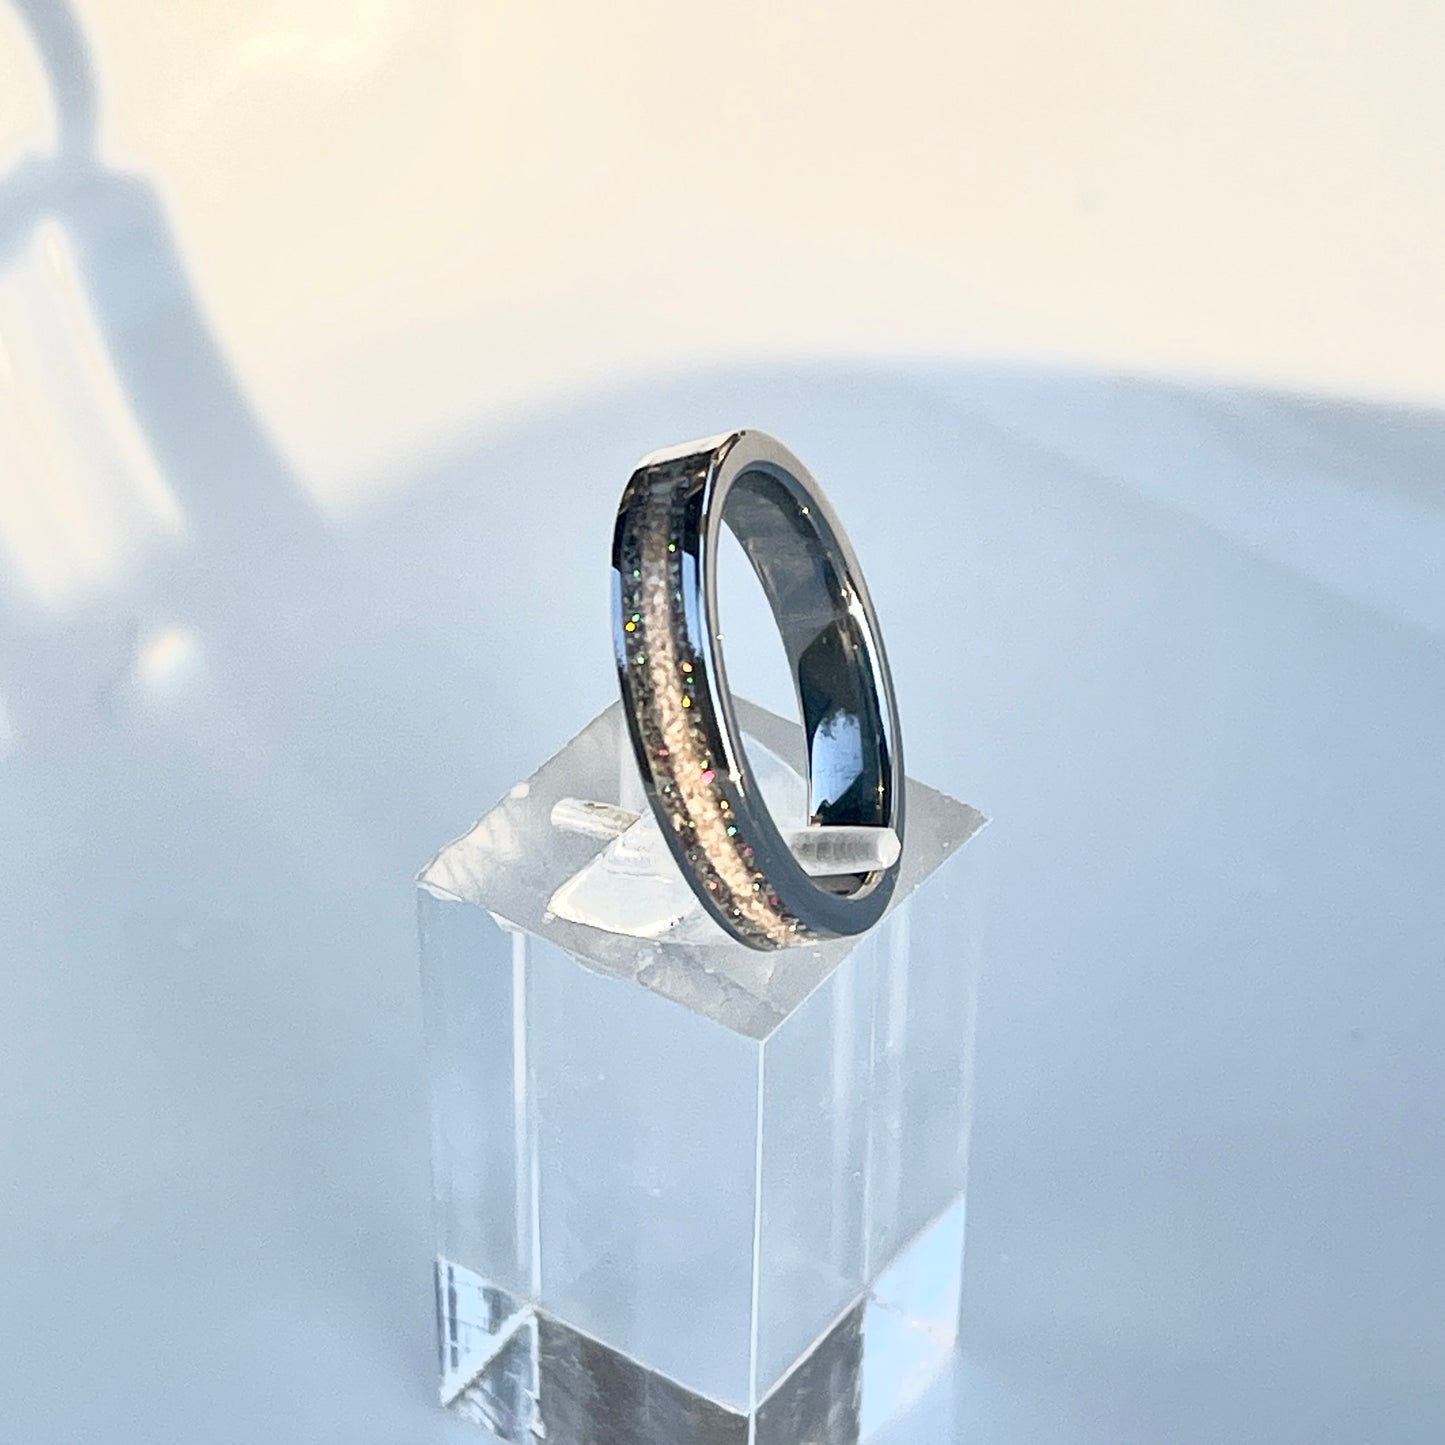 DiamondCast Cremation Ring